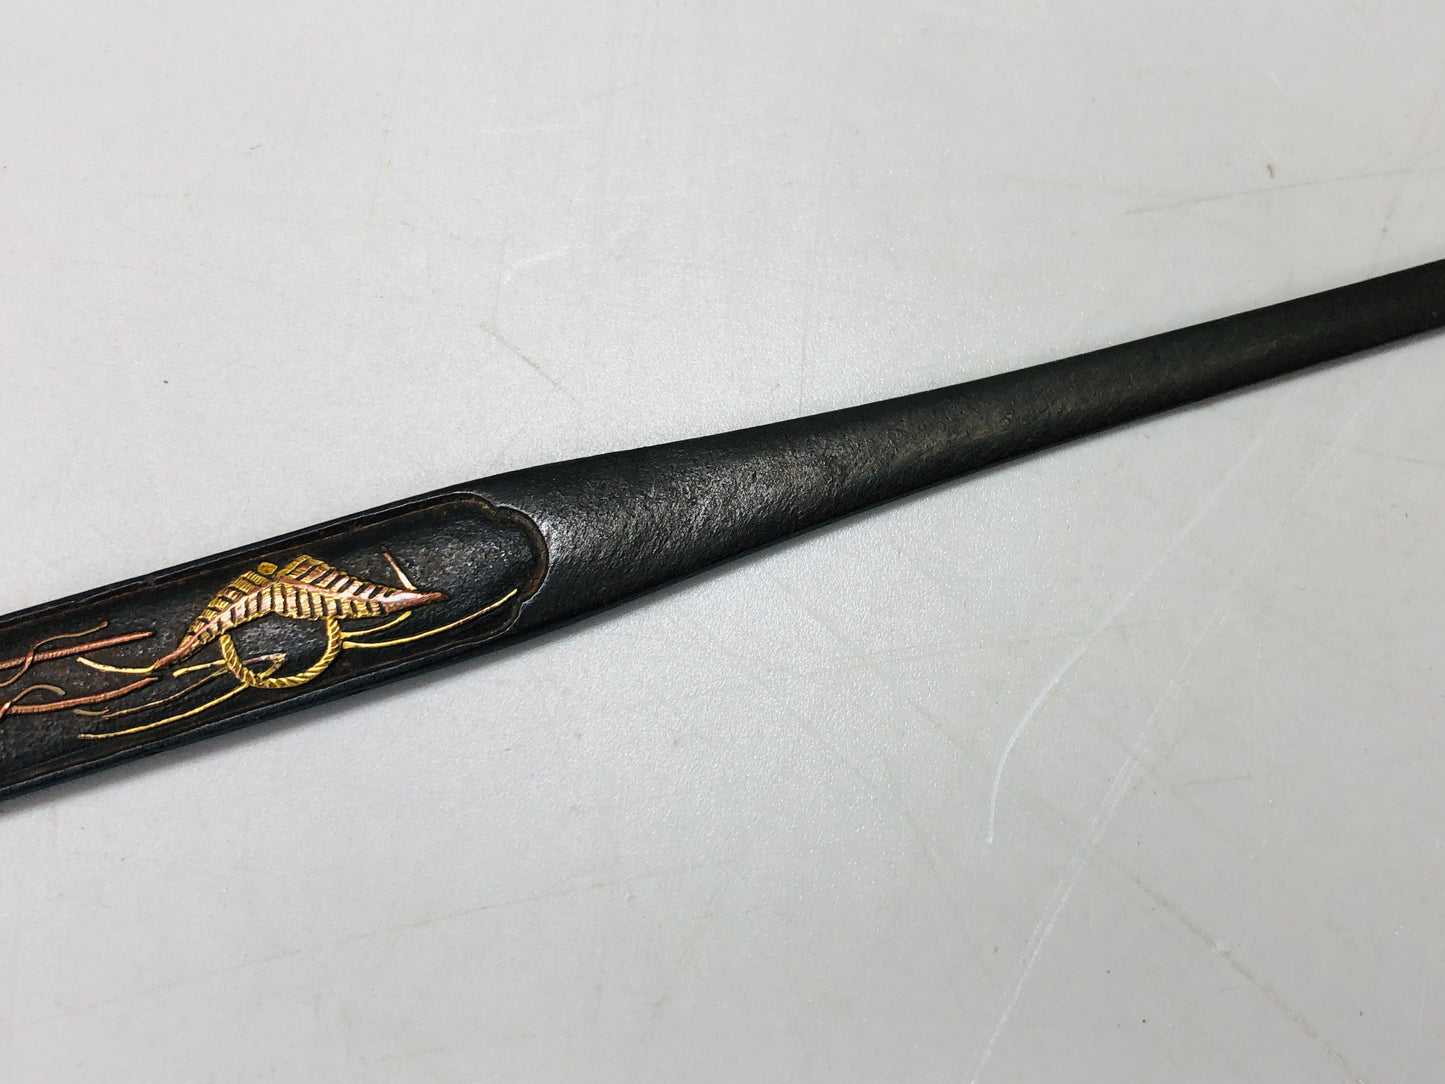 Y6330 [VIDEO] TSUKA Kogatana small sword Inlay shrimp prawn Japan Koshirae antique